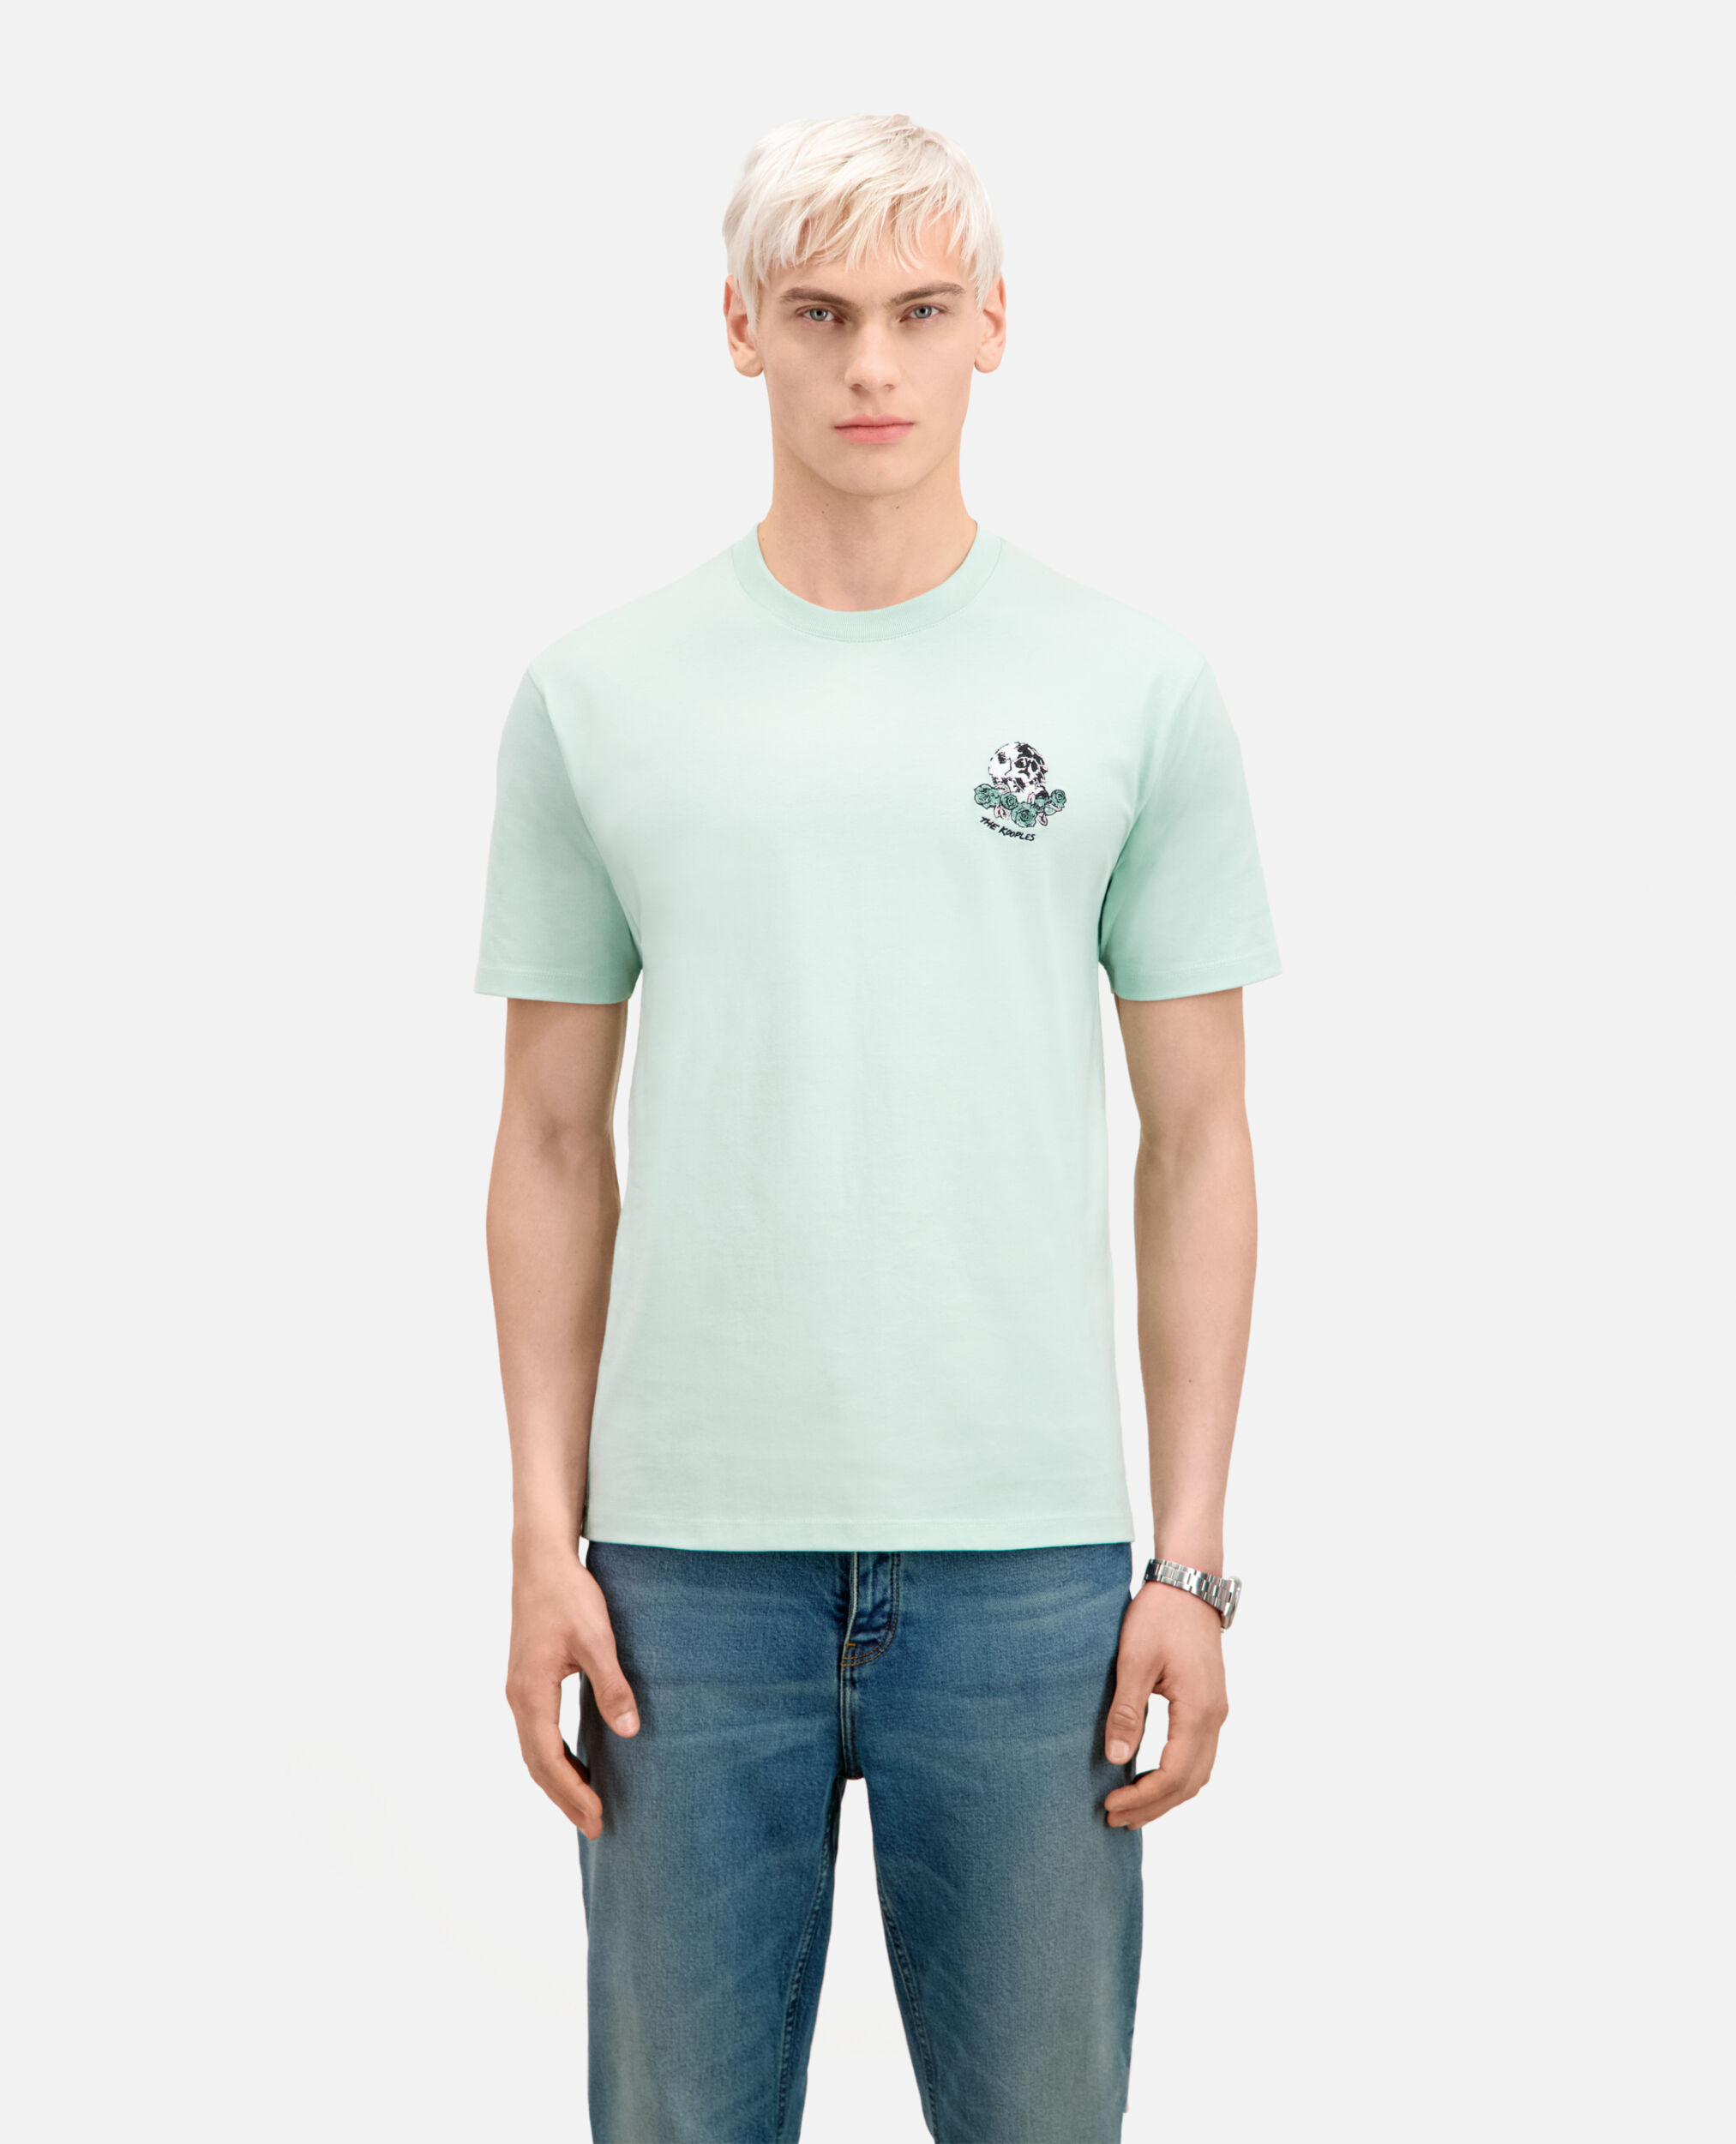 Grünes T-Shirt Herren mit Vintage-Skull-Stickerei, OCEAN, hi-res image number null